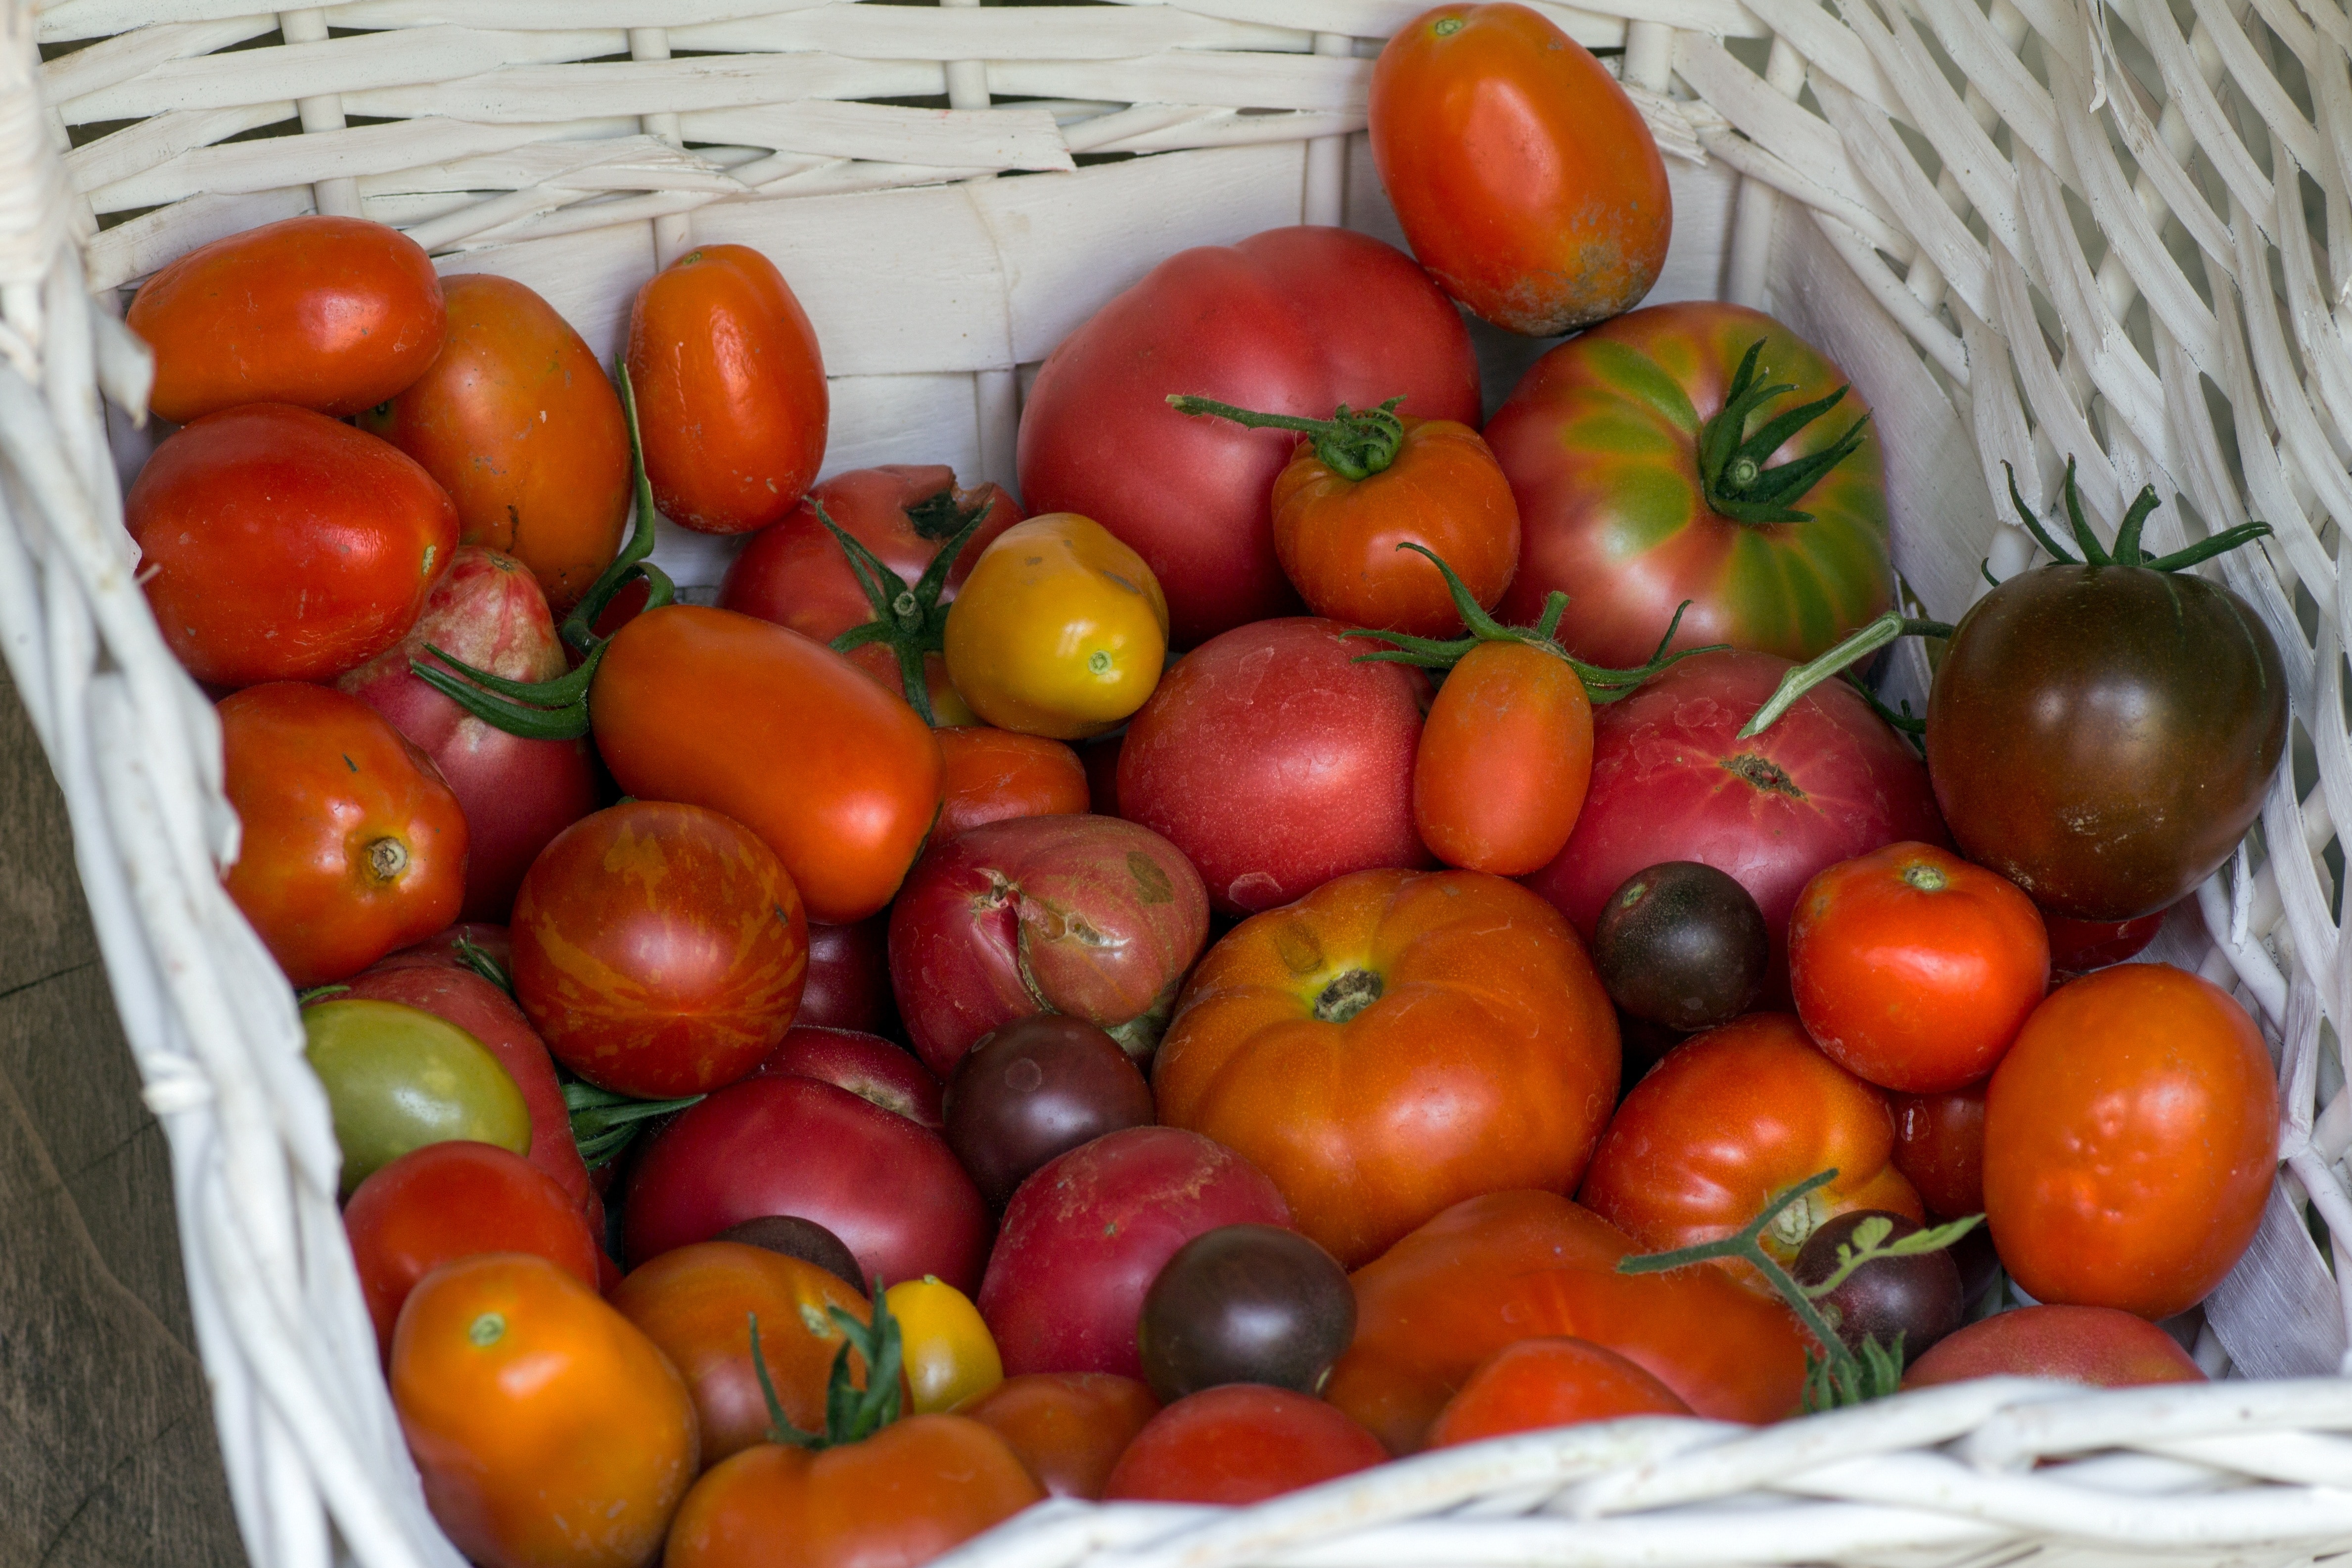 Vegetables, Tomatoes, Basket, fruit, food and drink